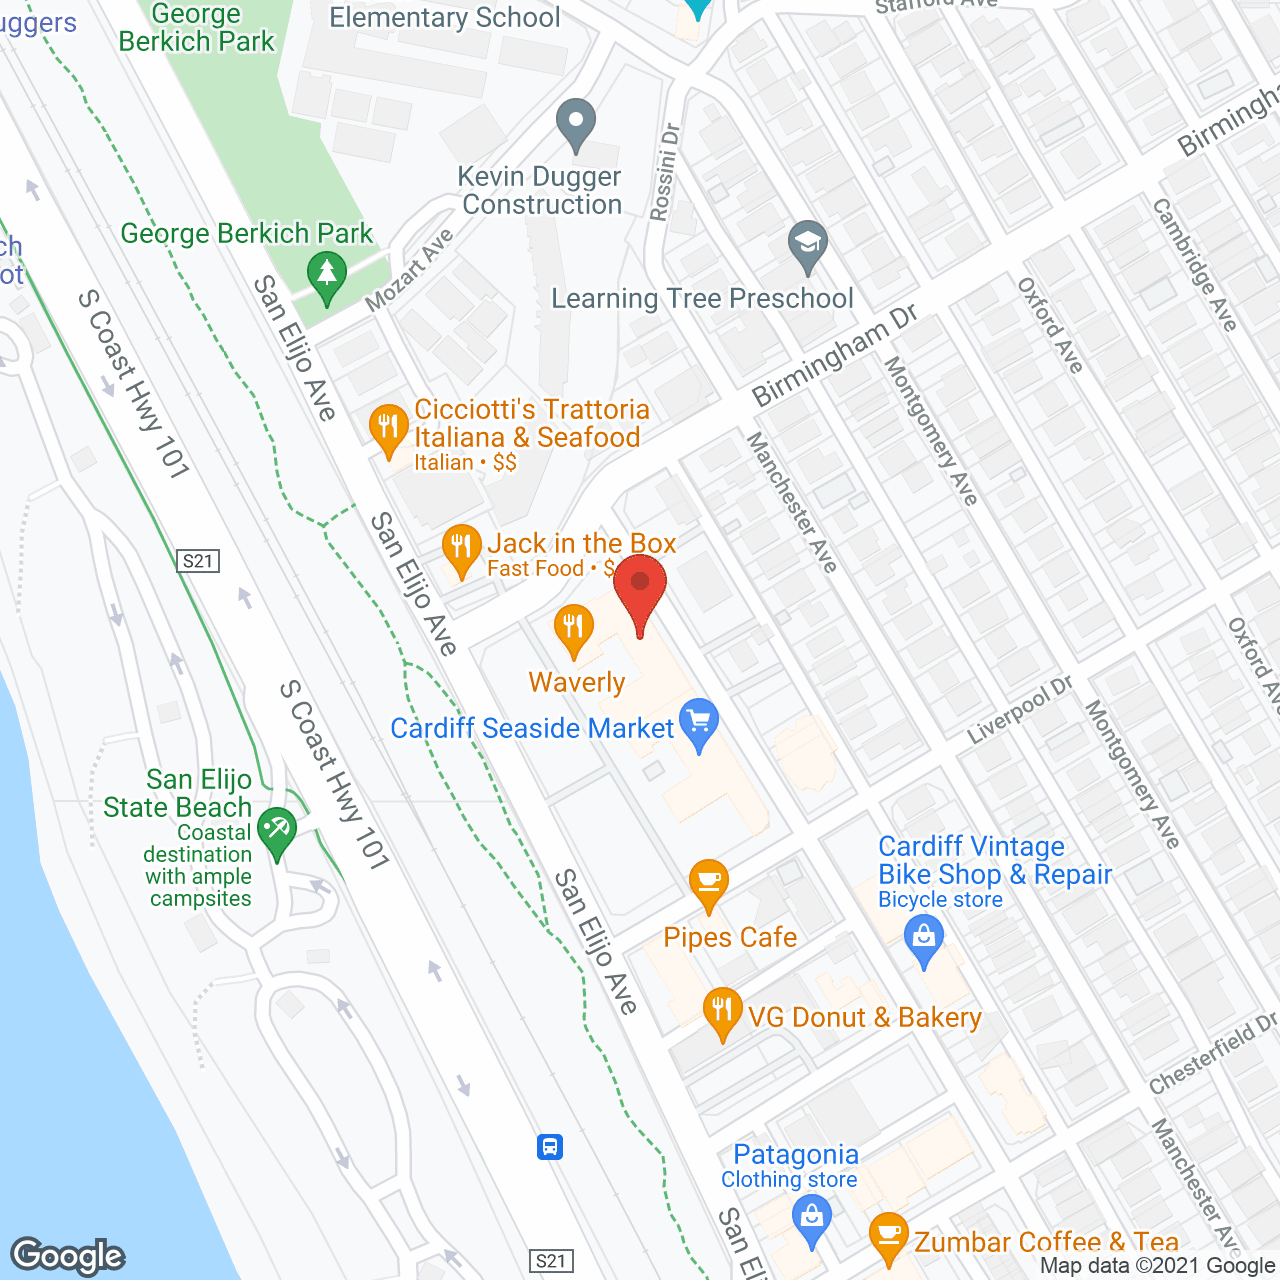 TheKey Encinitas in google map